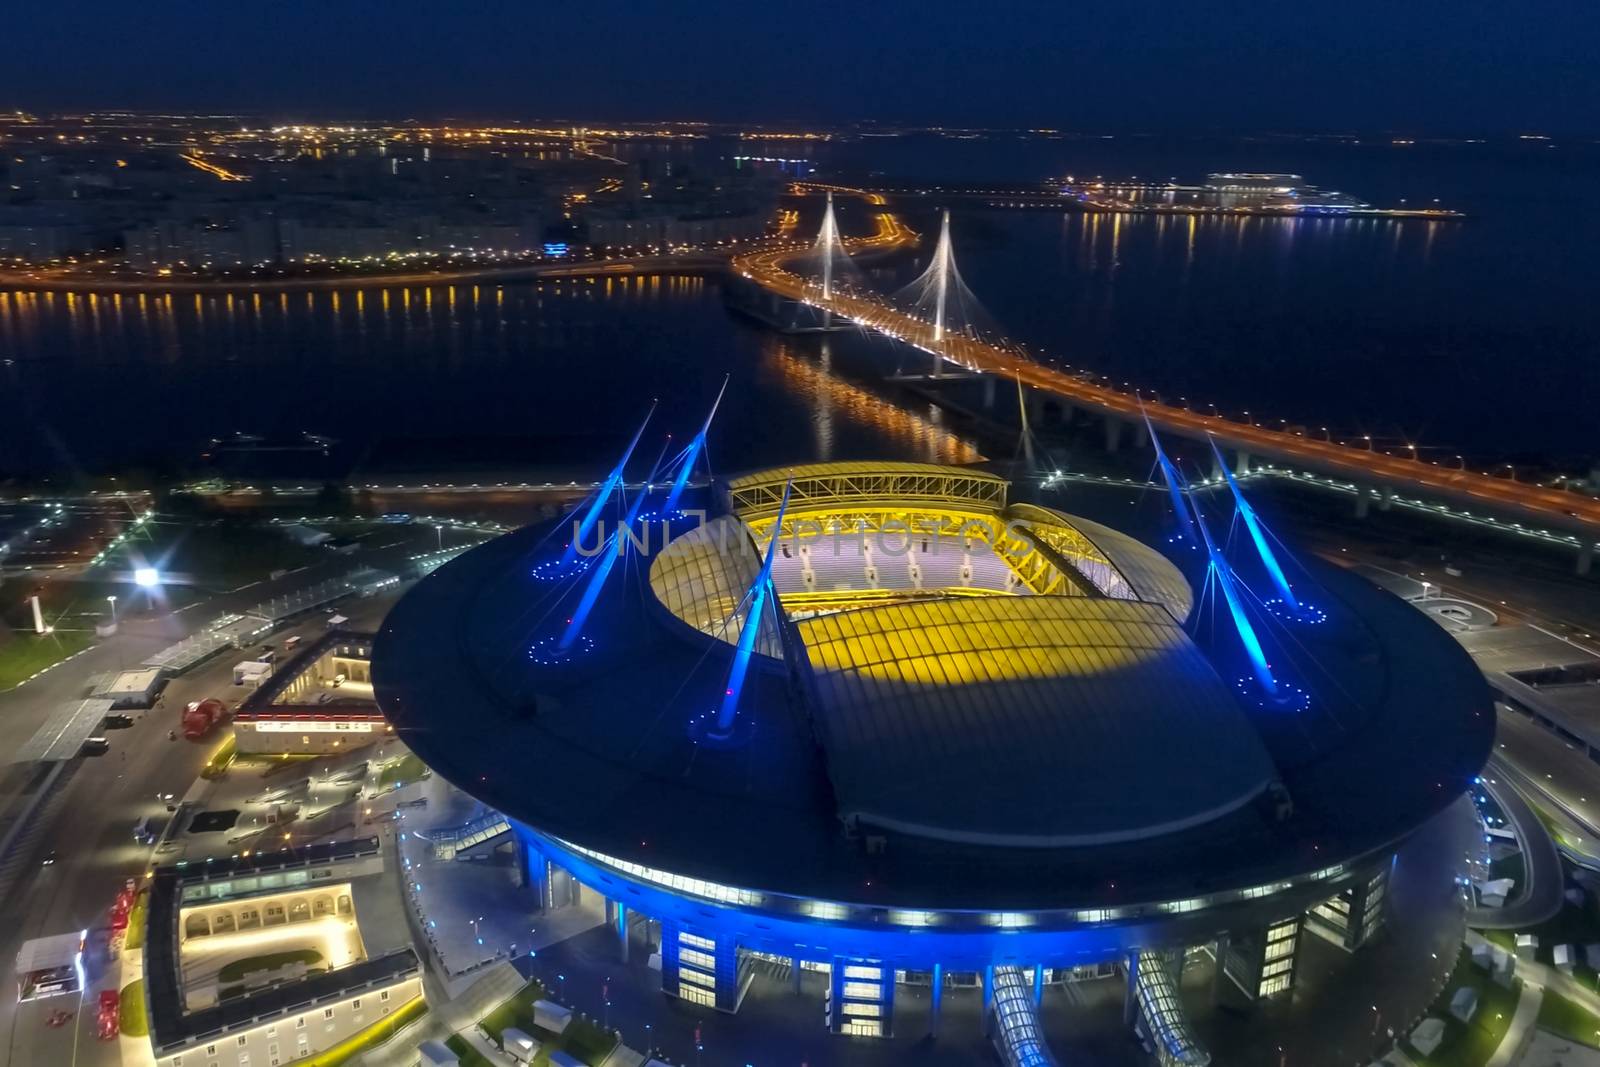 Stadium Zenith Arena at night. Illuminated by multi-colored lights the stadium at night